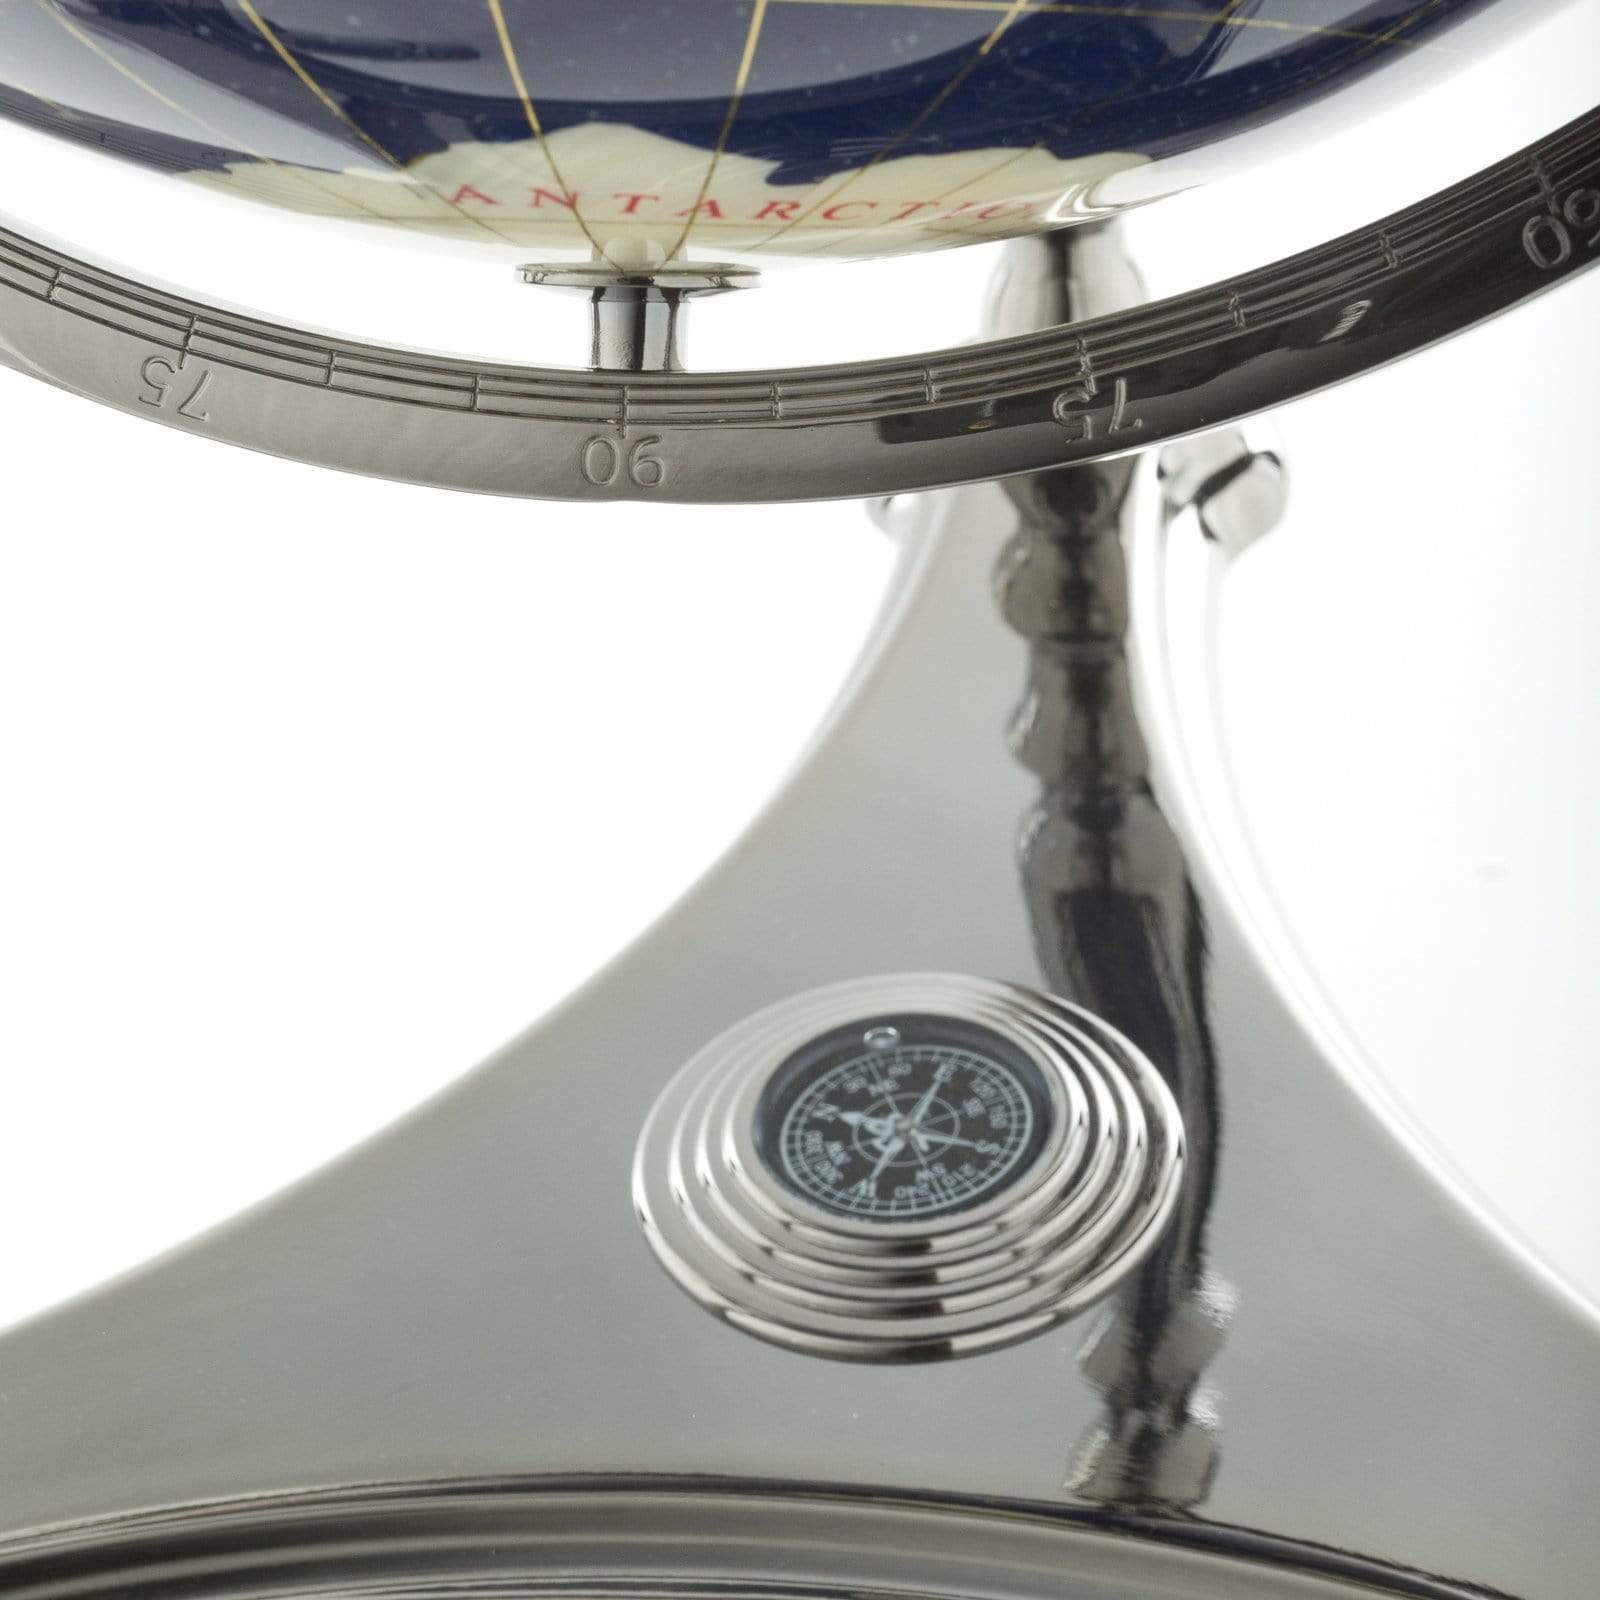 Kalifano Gemstone Globes 37" Tall Gemstone Globe with Lapis Ocean on Ambassador Gun Metal 3-Leg High Stand GTH330GM-LP